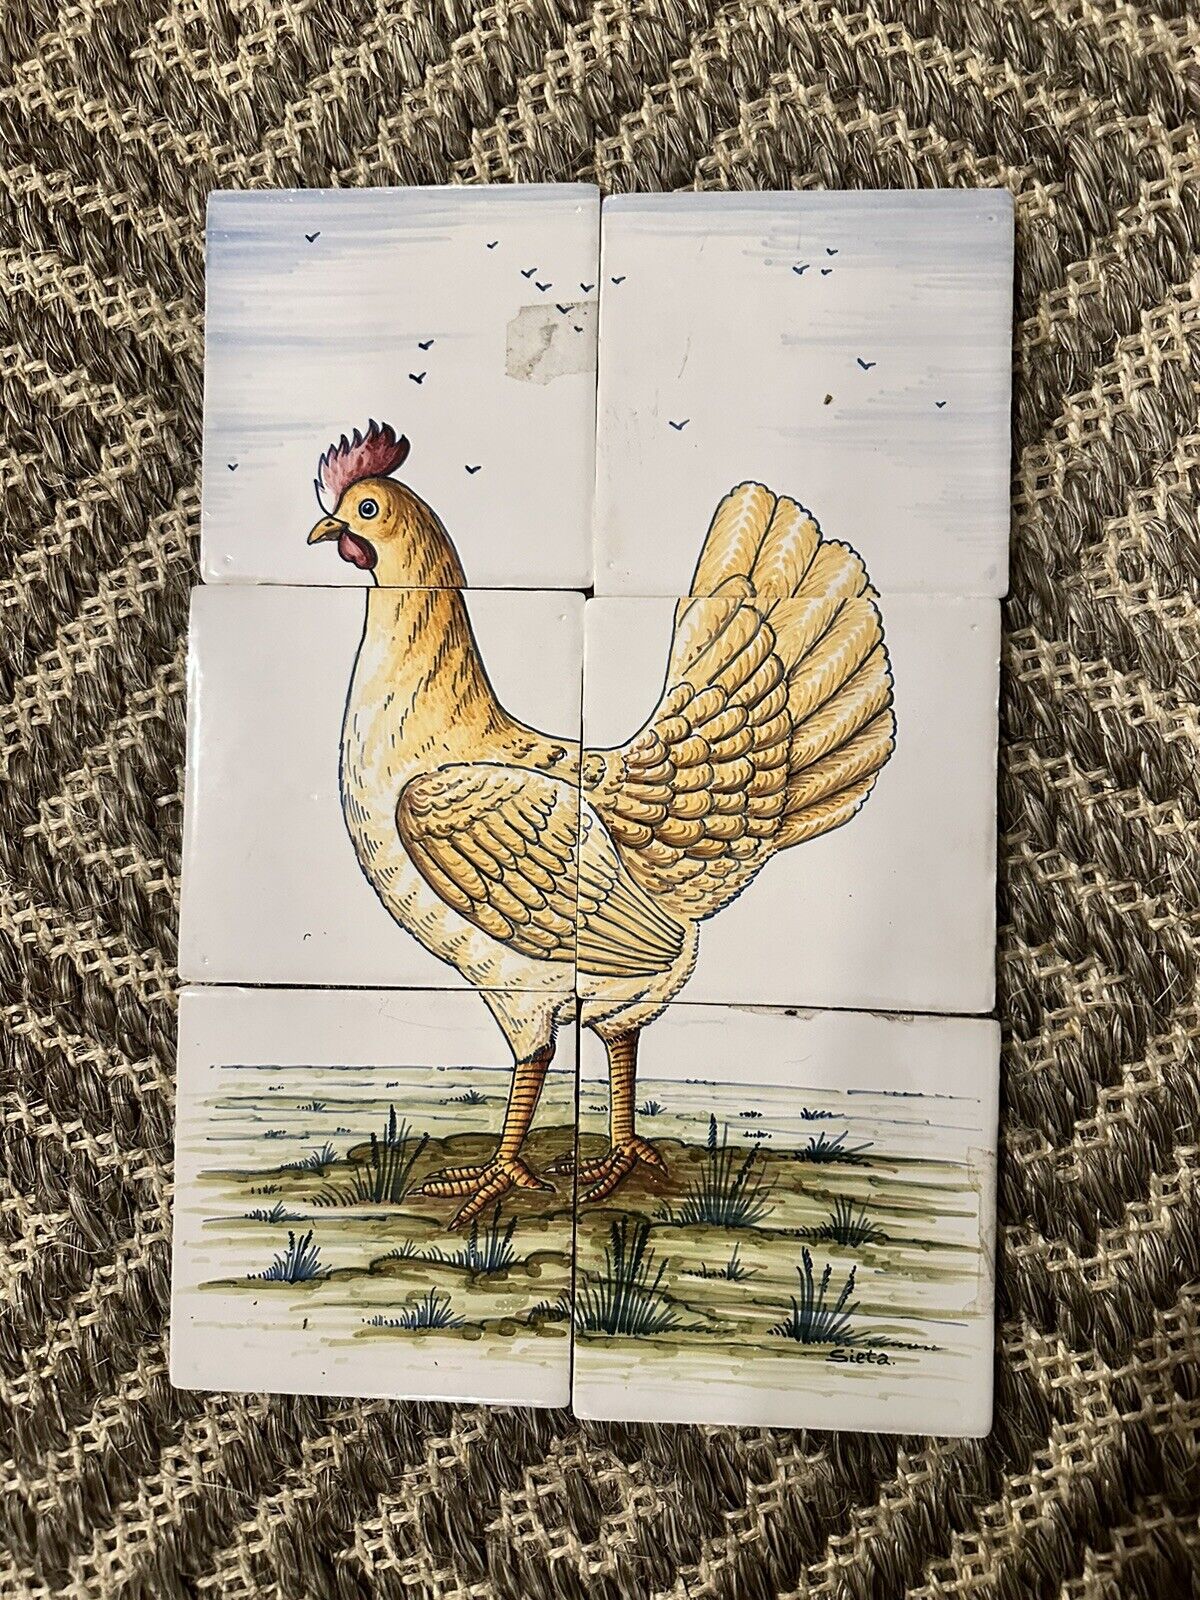 Vintage delft Style Tile Panel Mural Hen Rooster Bird Chicken 5x5” Tiles